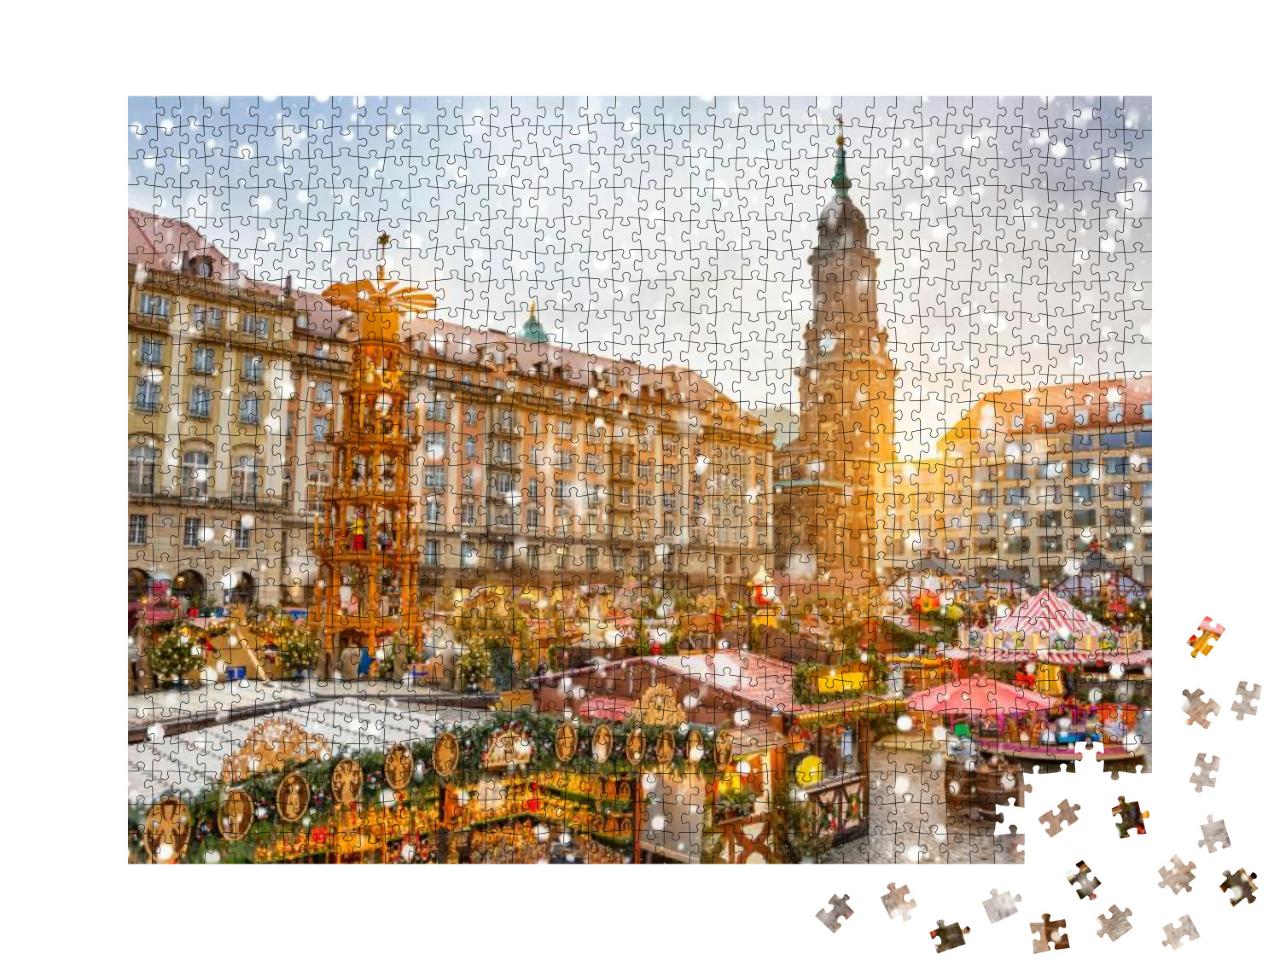 Christmas Market Striezelmarkt in Dresden, Germany... Jigsaw Puzzle with 1000 pieces